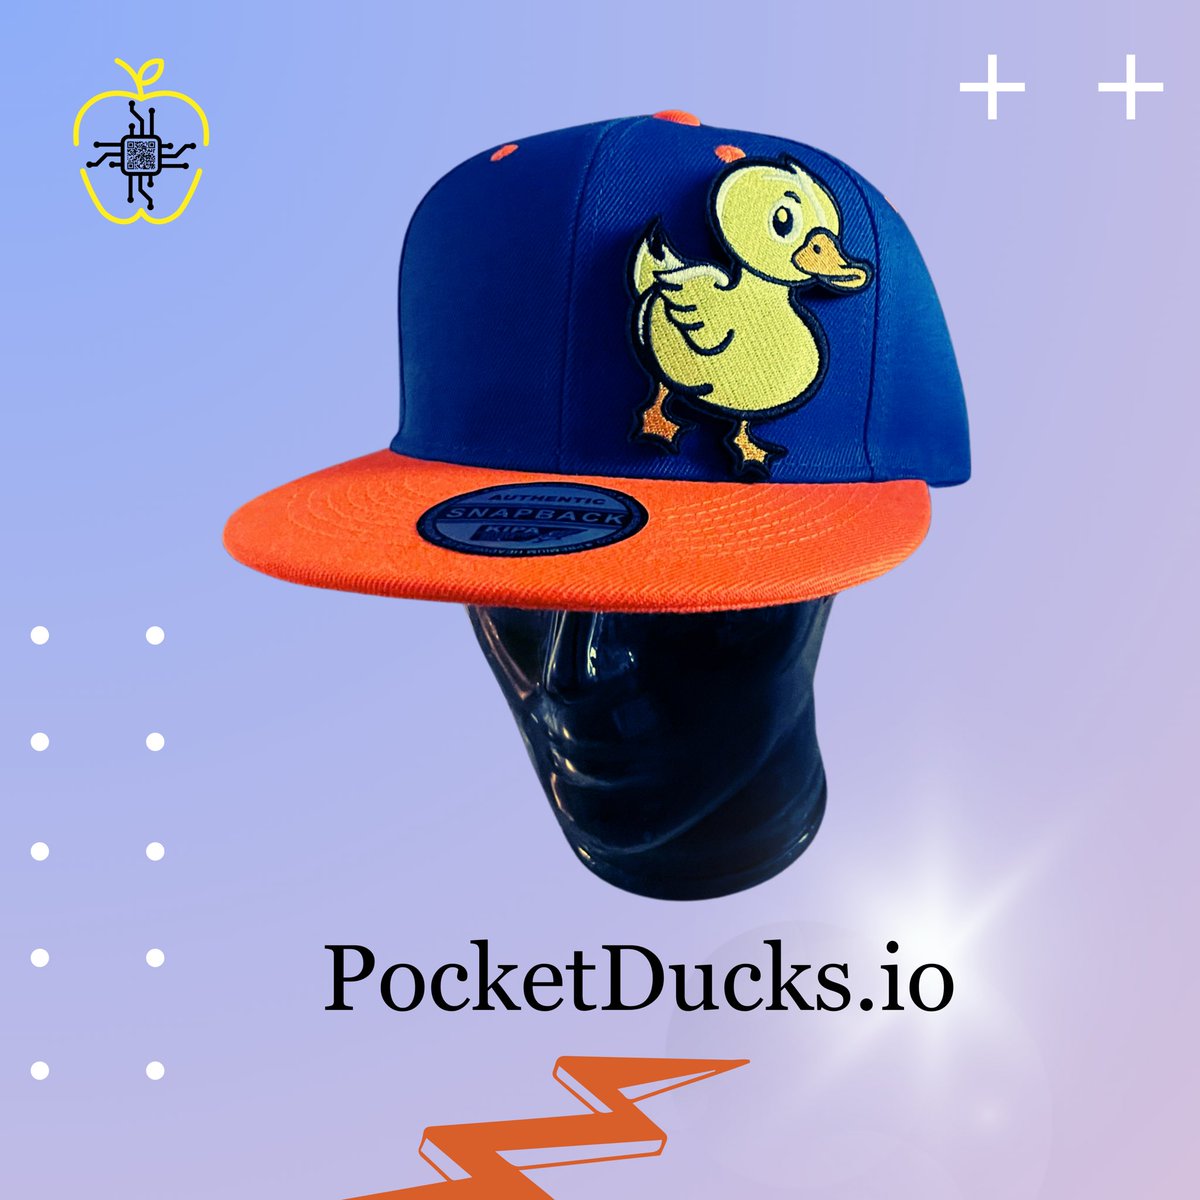 PocketDucks.io

#wearableart #collectibles #nfc